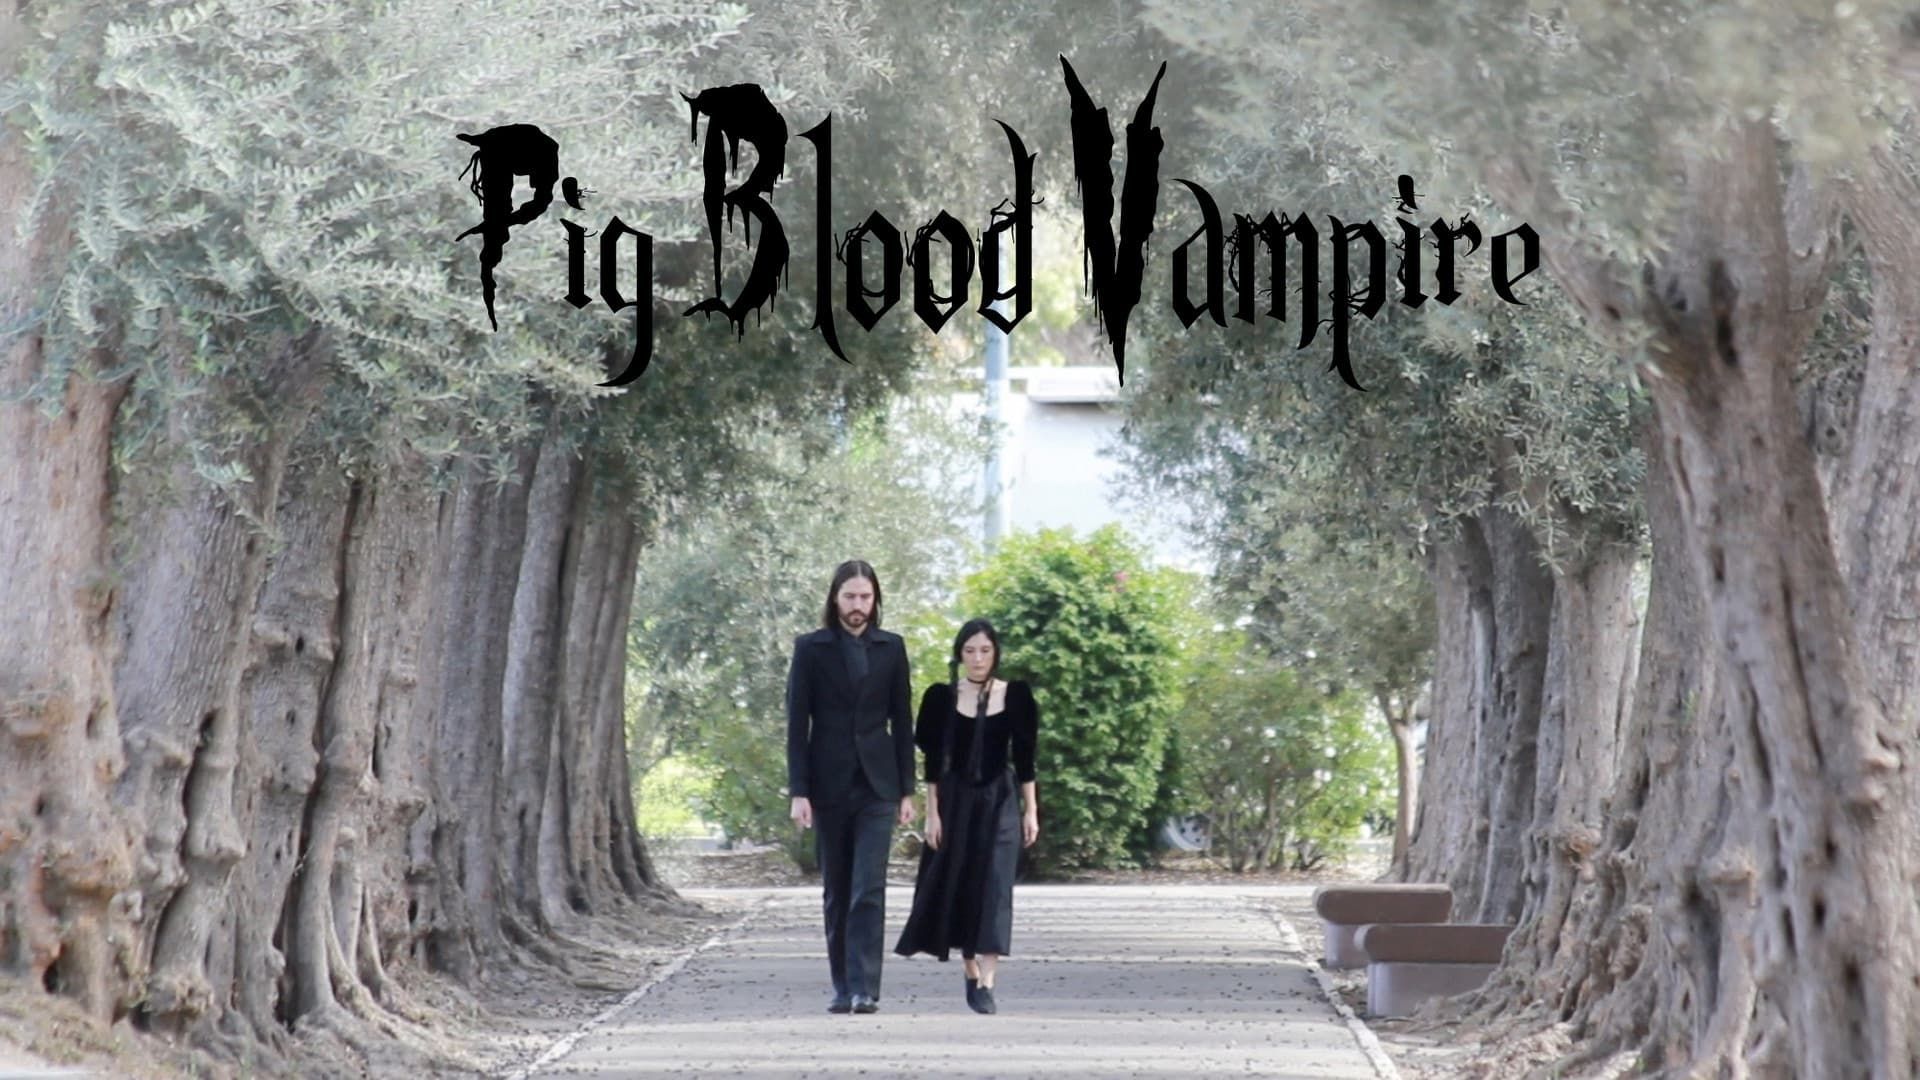 Pig Blood Vampire background